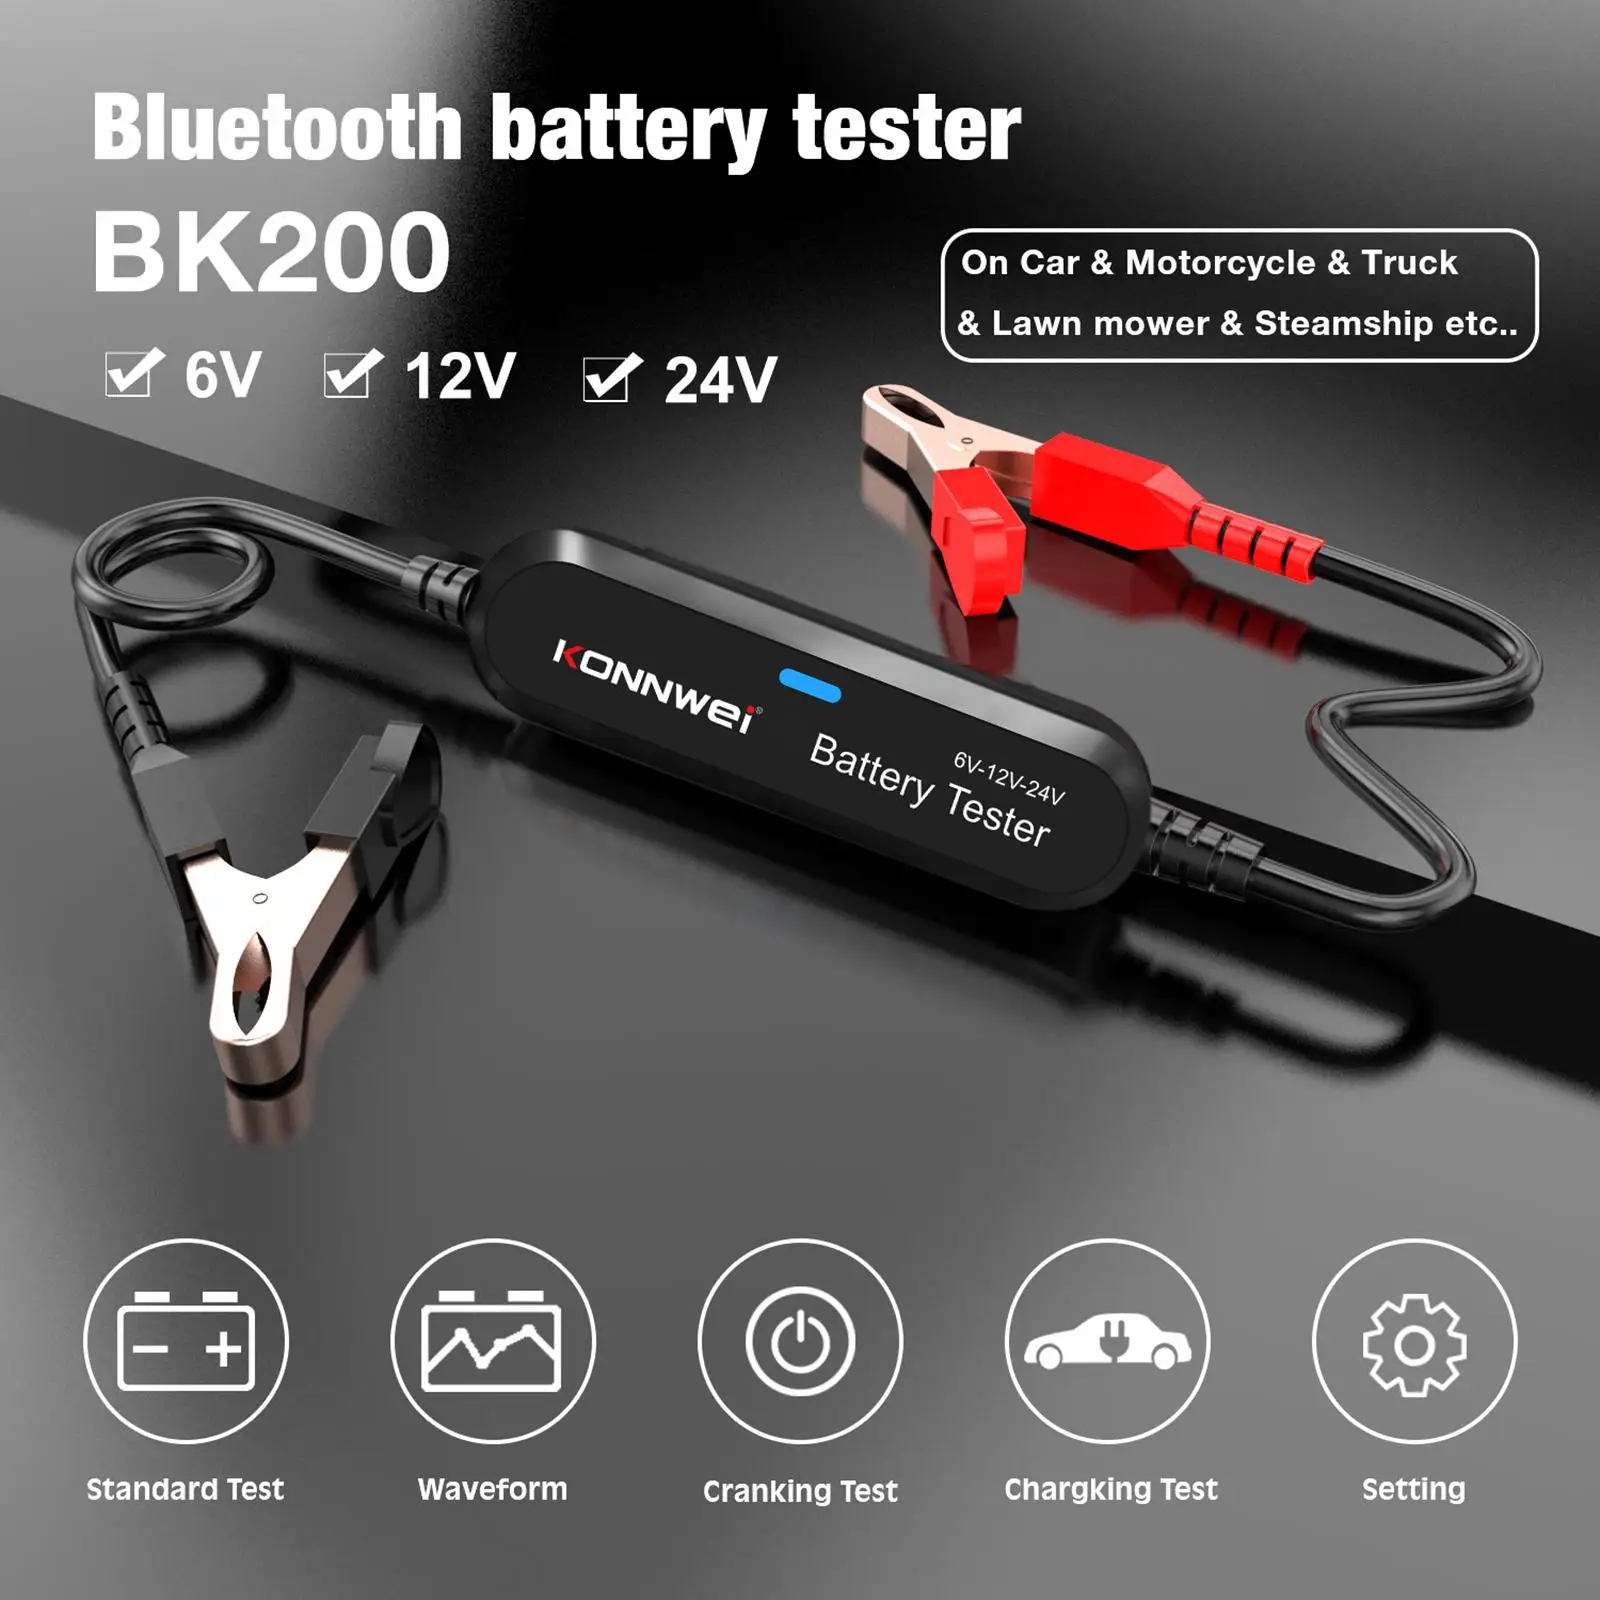 Bluetooth Car Battery Testing Tool 6V 12V 24V Digital Portable for Boat